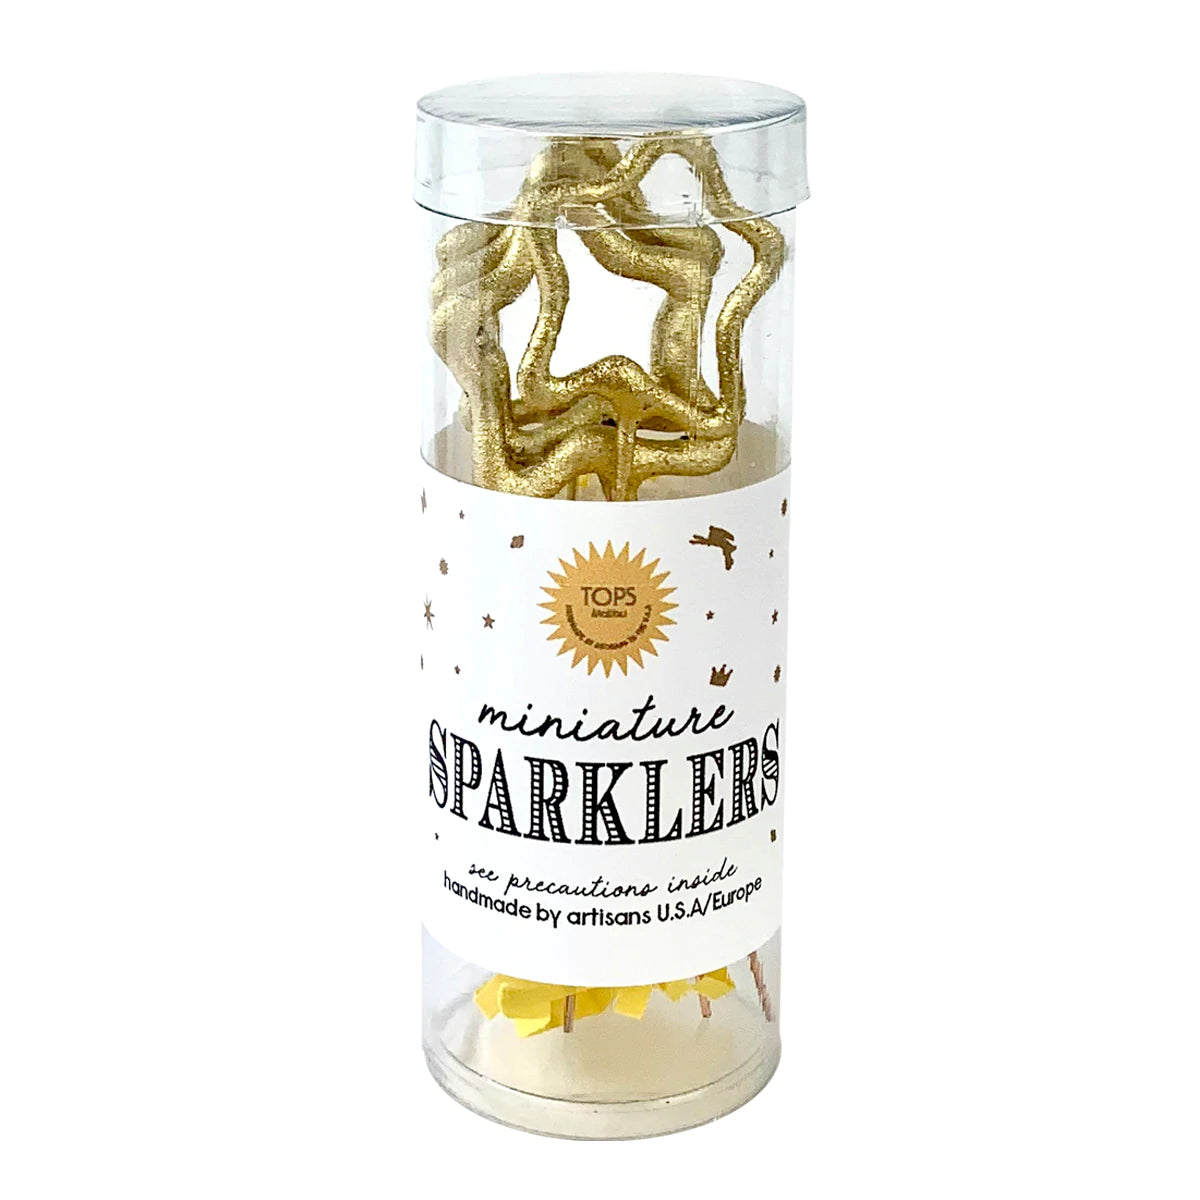 Mini Gold Sparklers in Tube - The Silver Dahlia